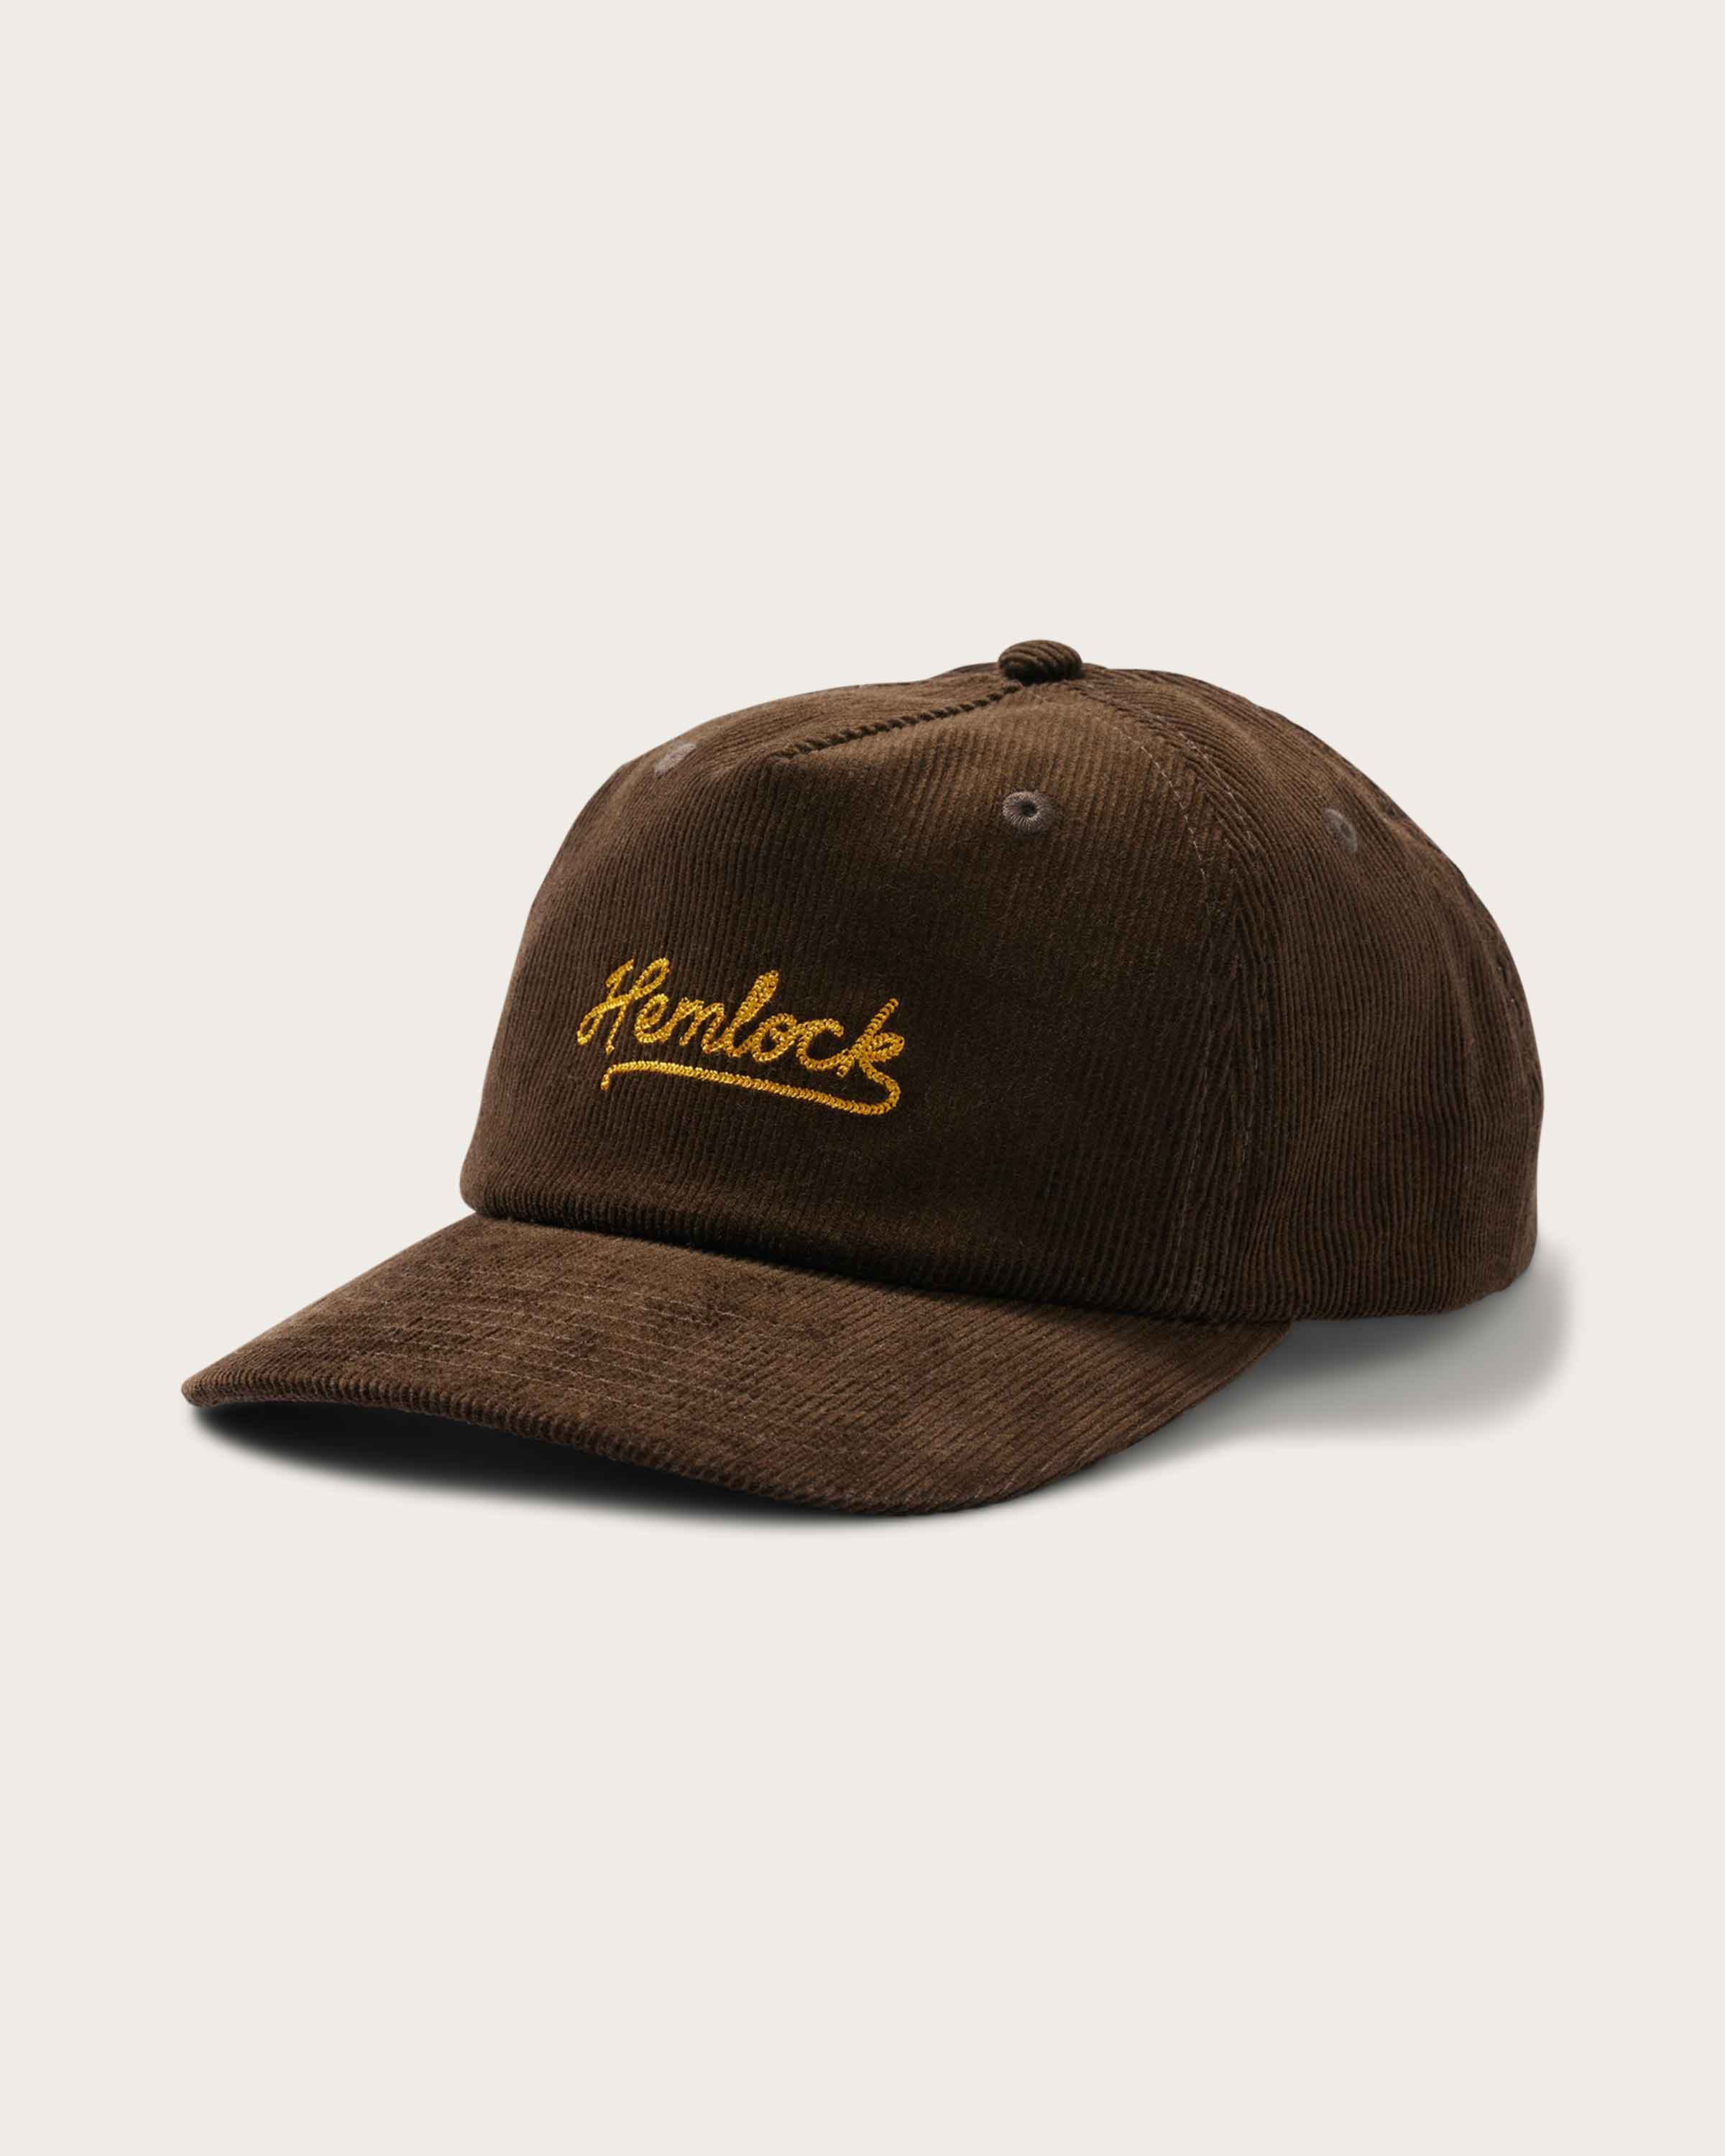 Wesley 5 Panel Hat in Mocha - undefined - Hemlock Hat Co. Ball Caps